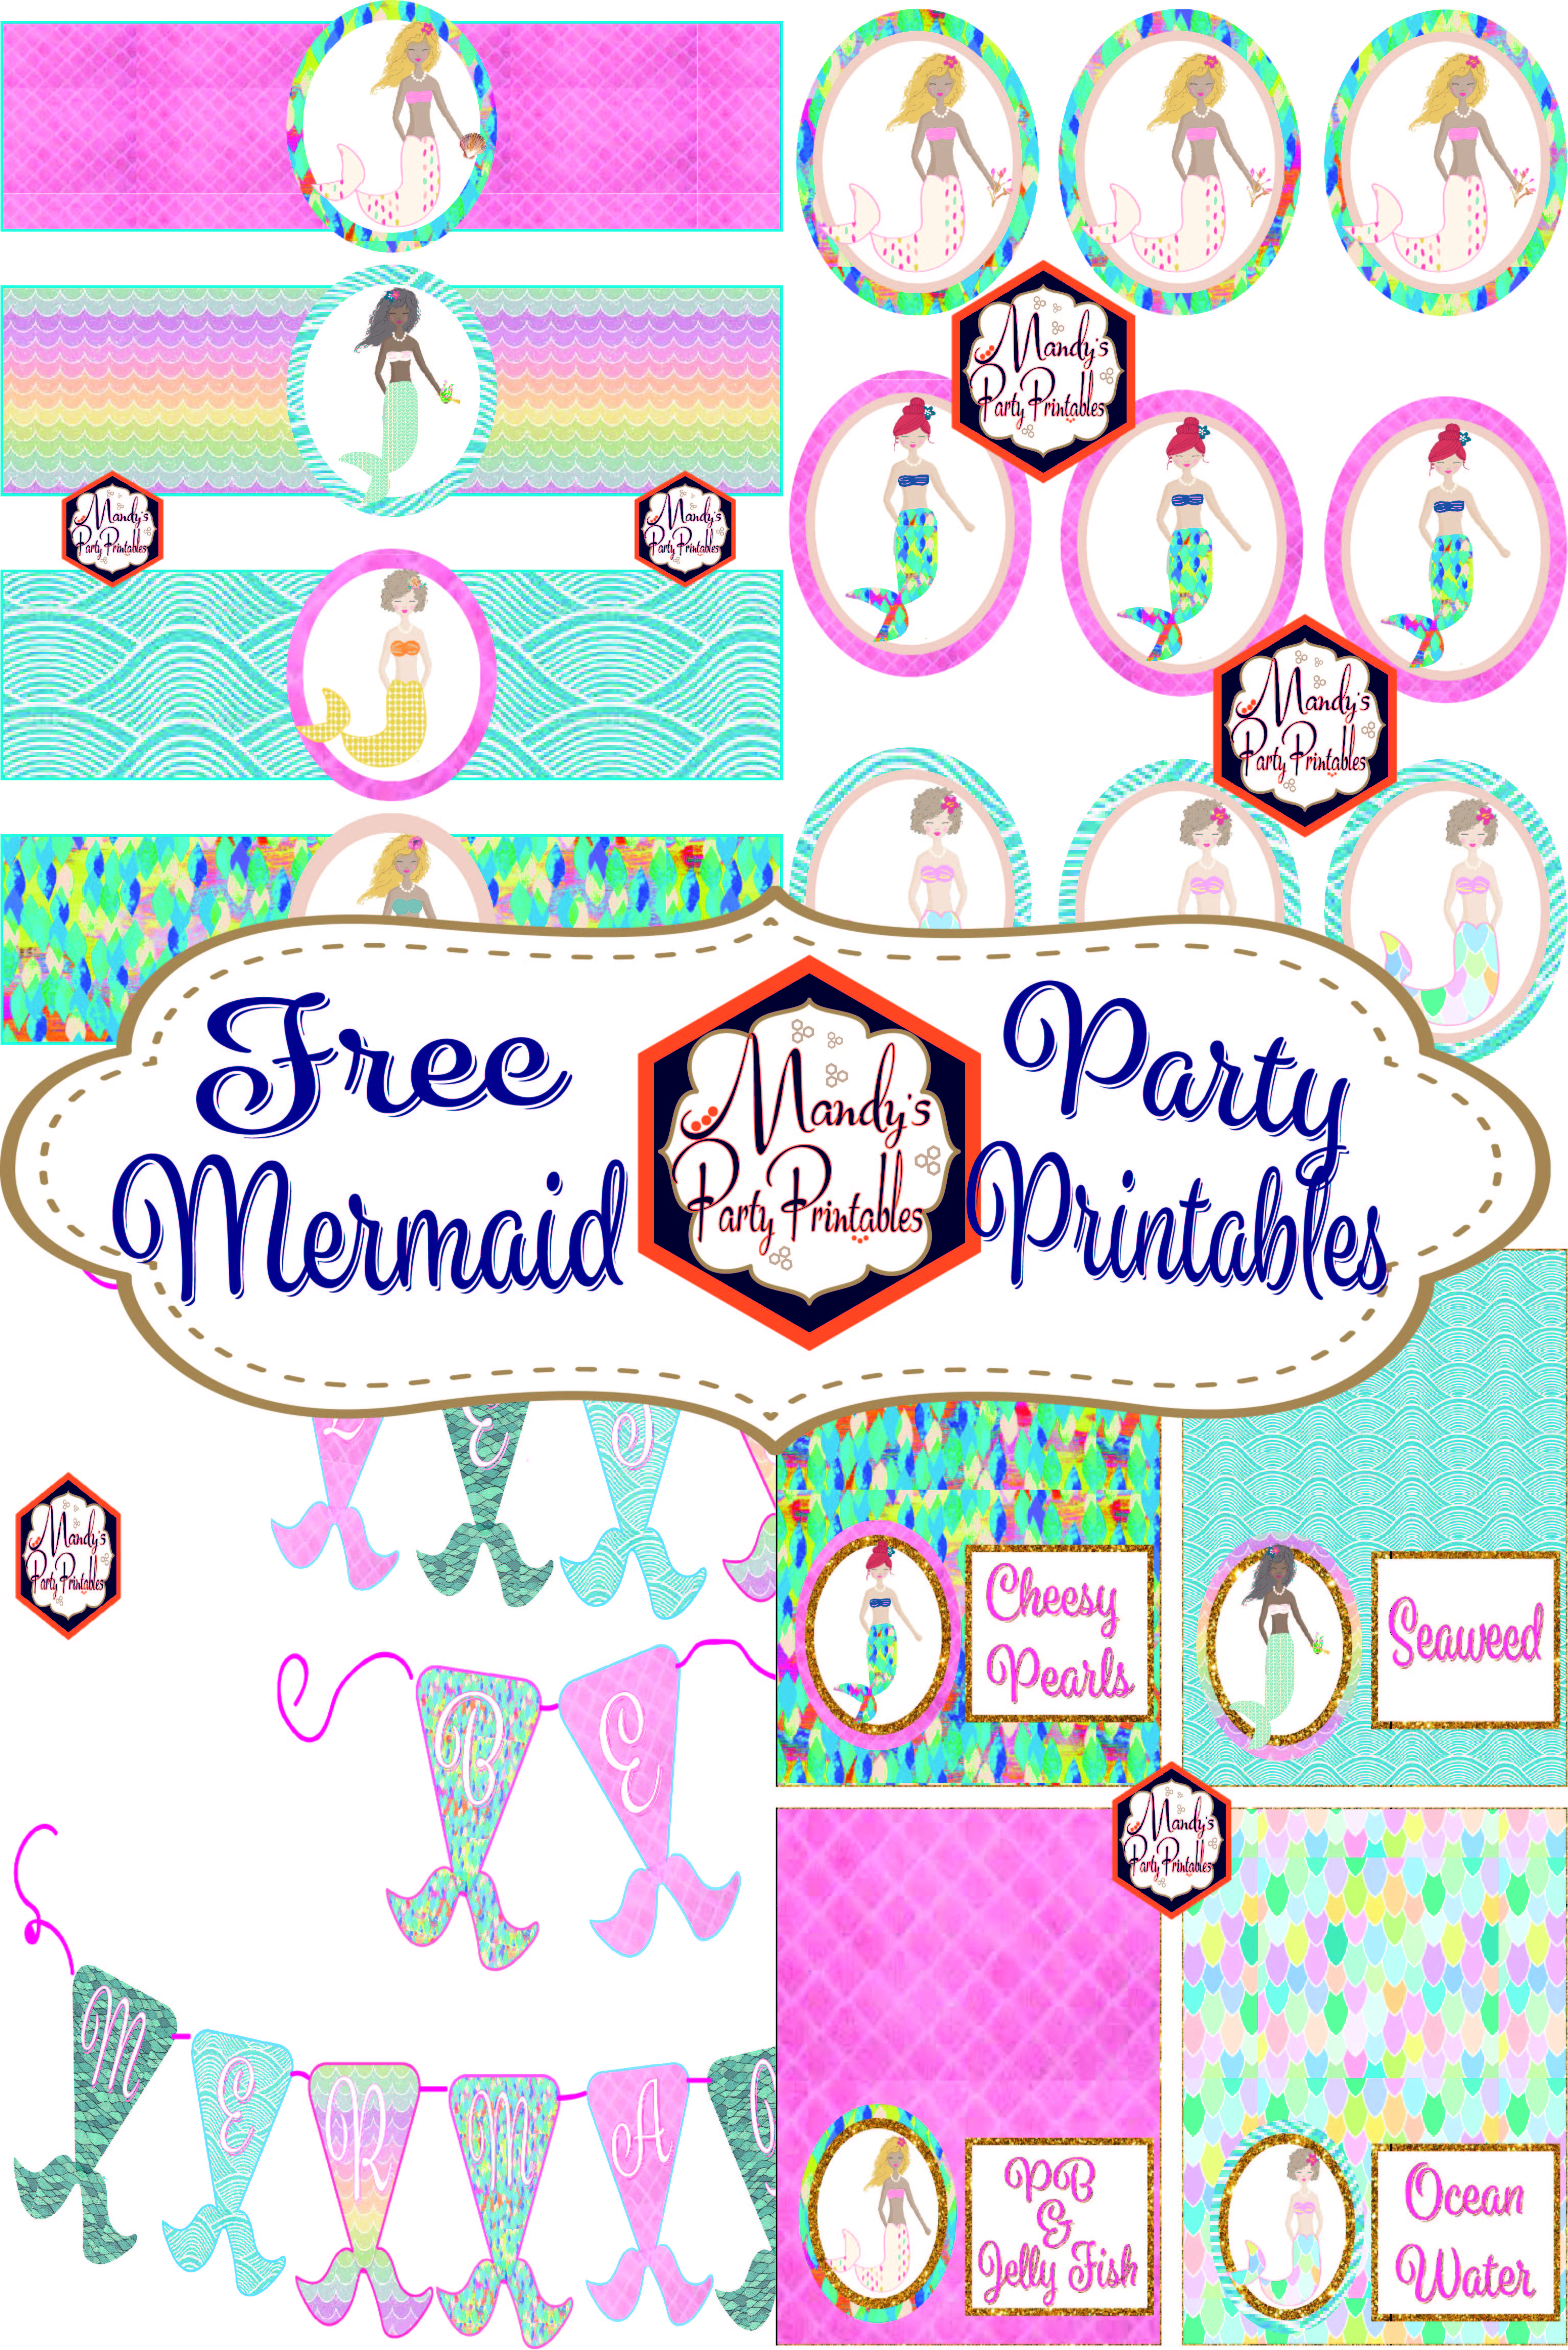 free-mermaid-birthday-party-printables-mandy-s-party-printables